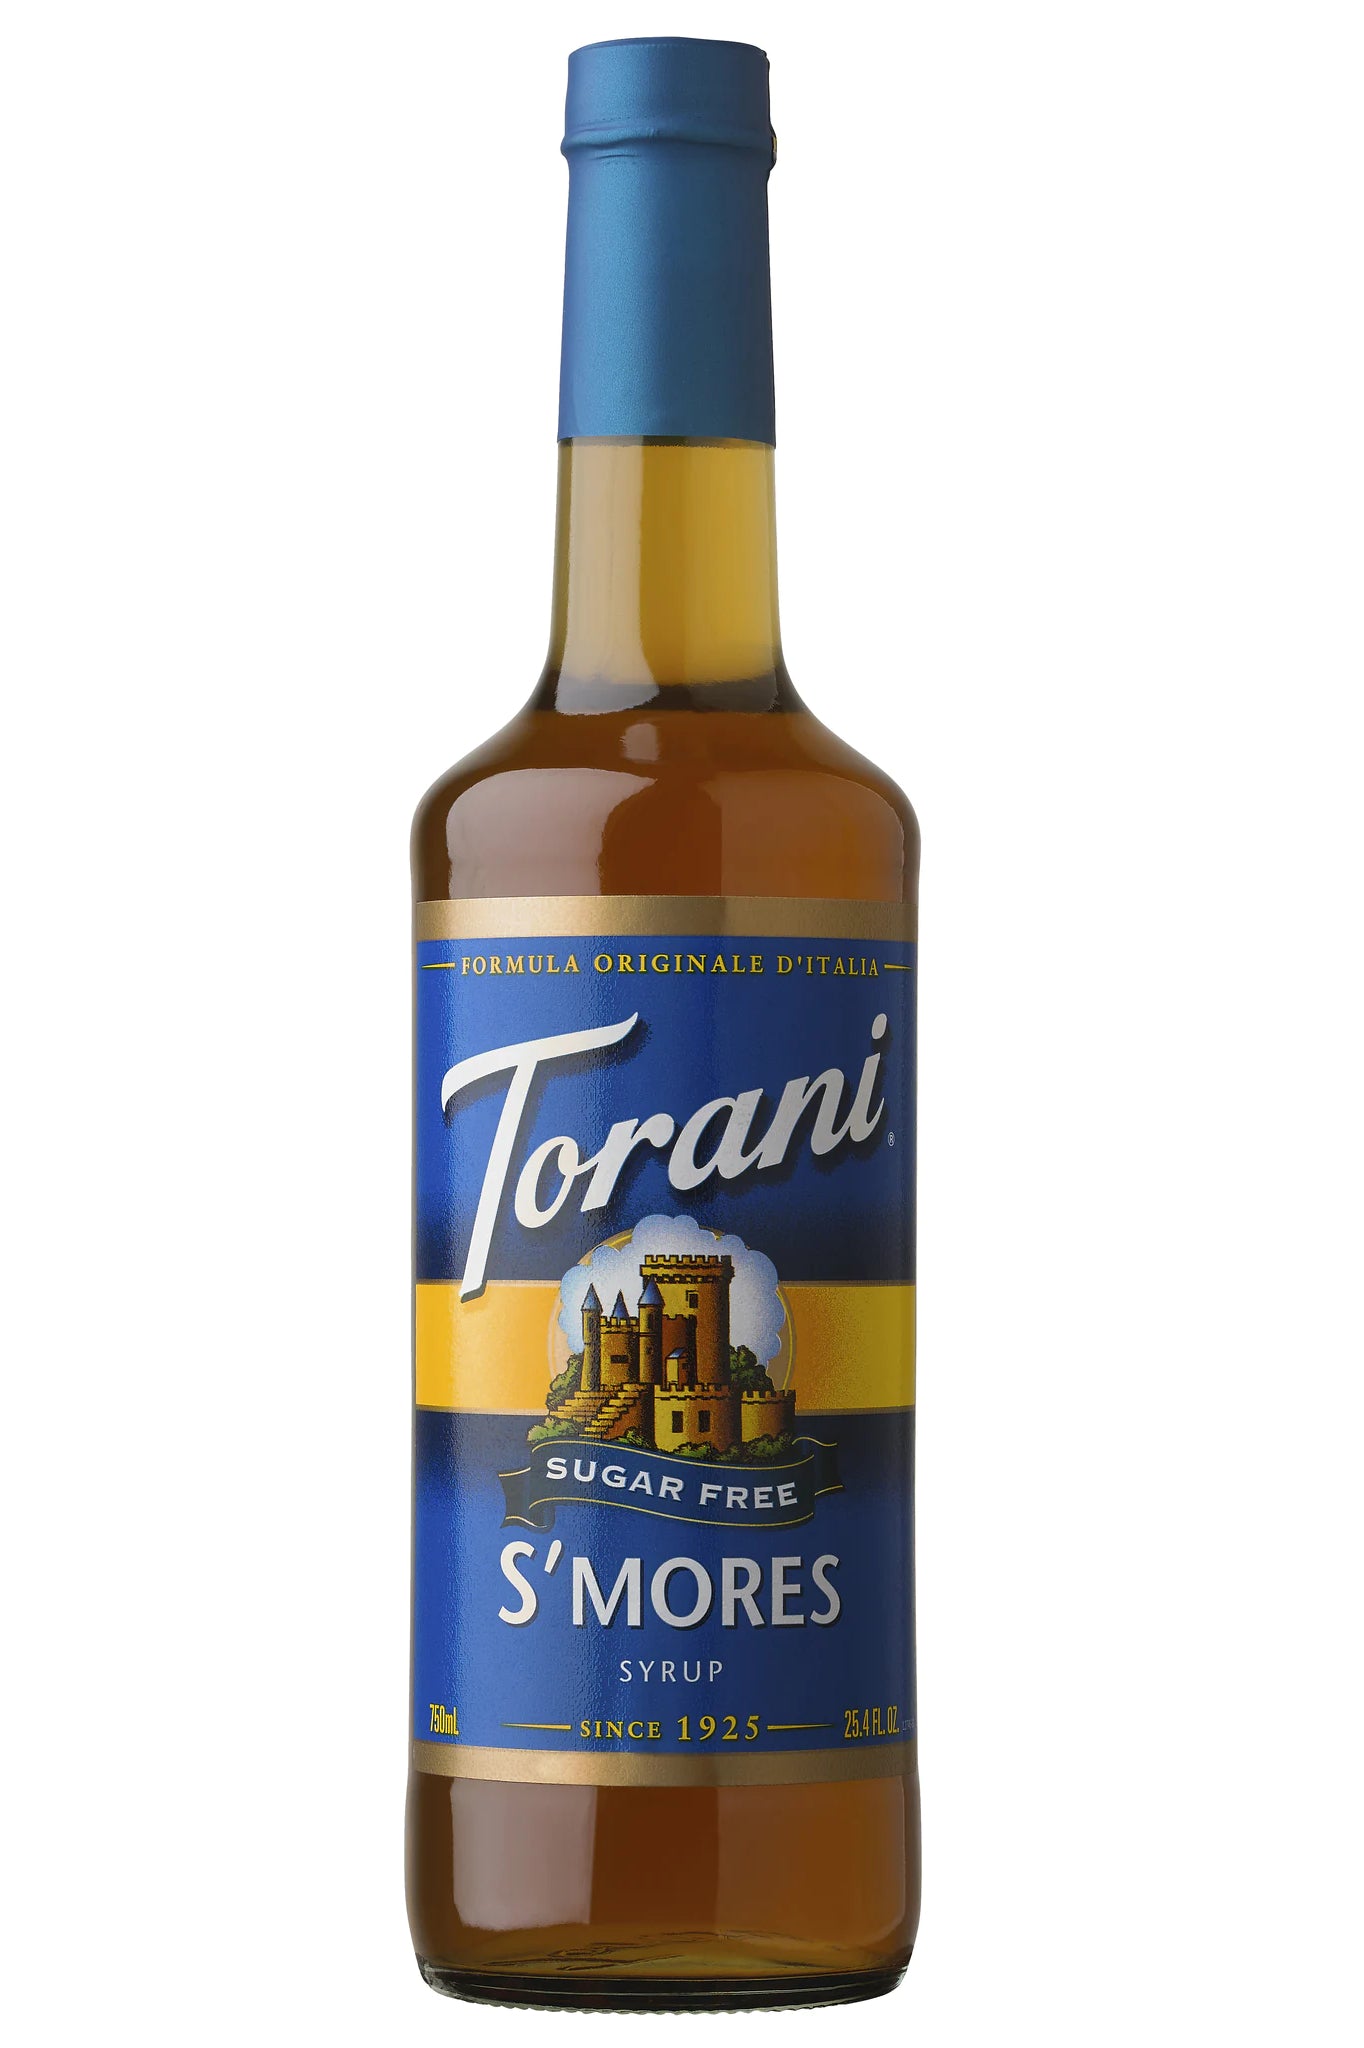 Torani Sugar Free Syrup S'mores 750ml